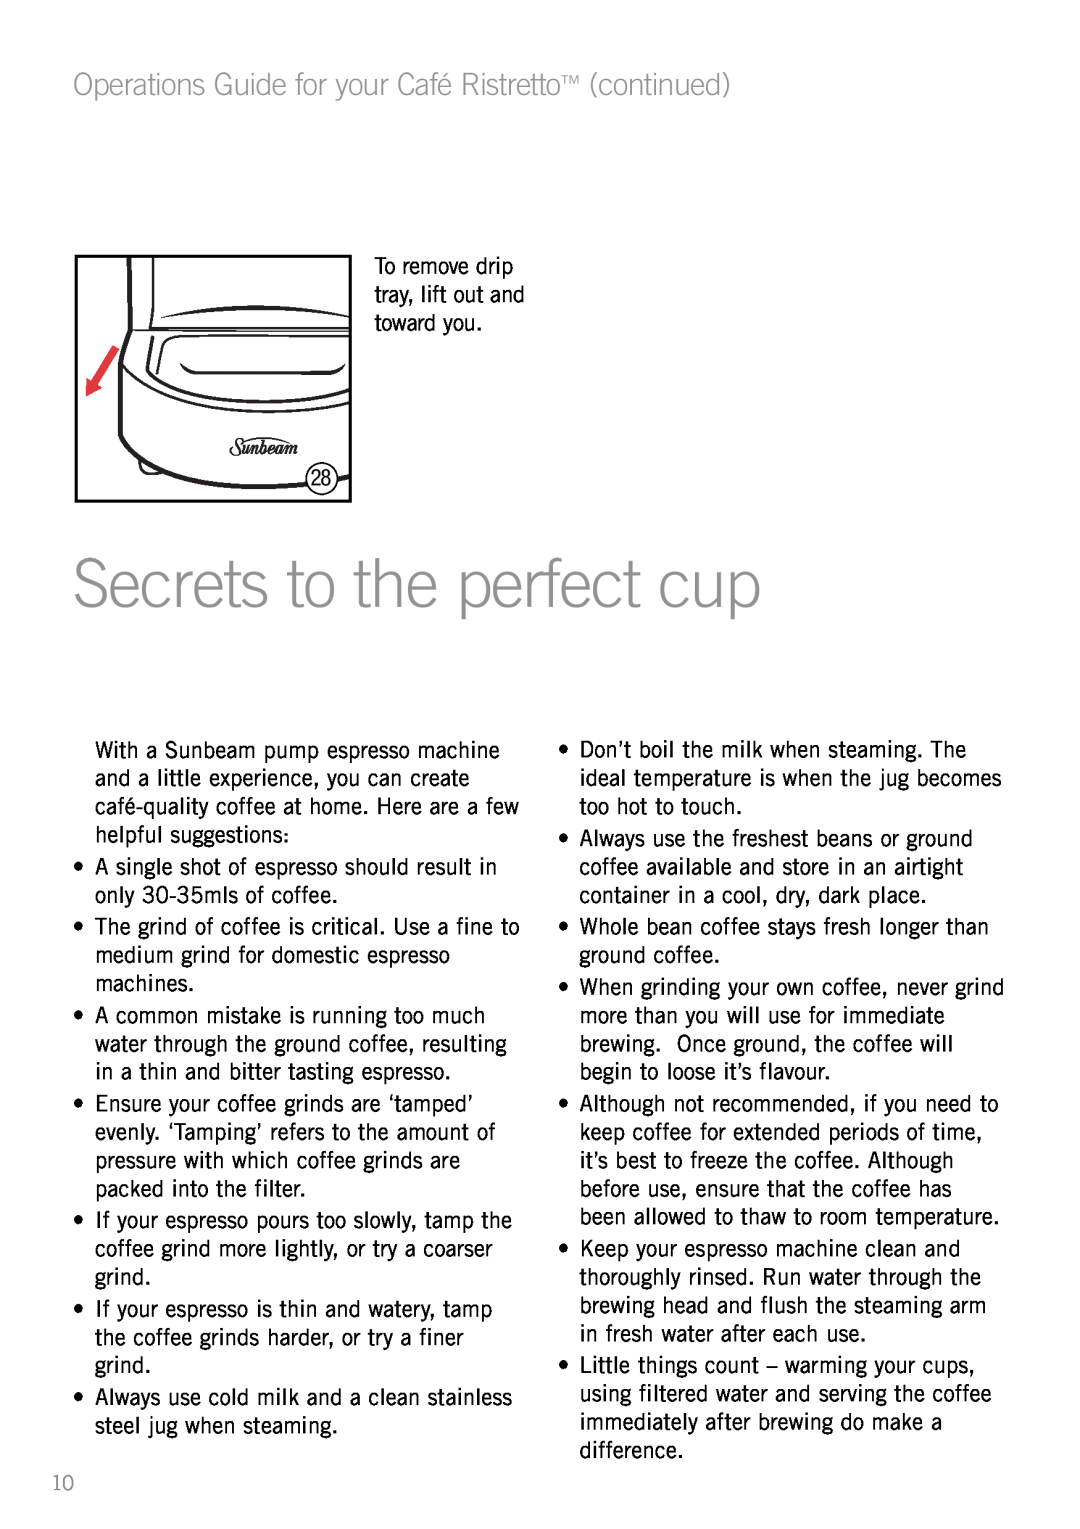 Sunbeam EM2300 manual Secrets to the perfect cup 